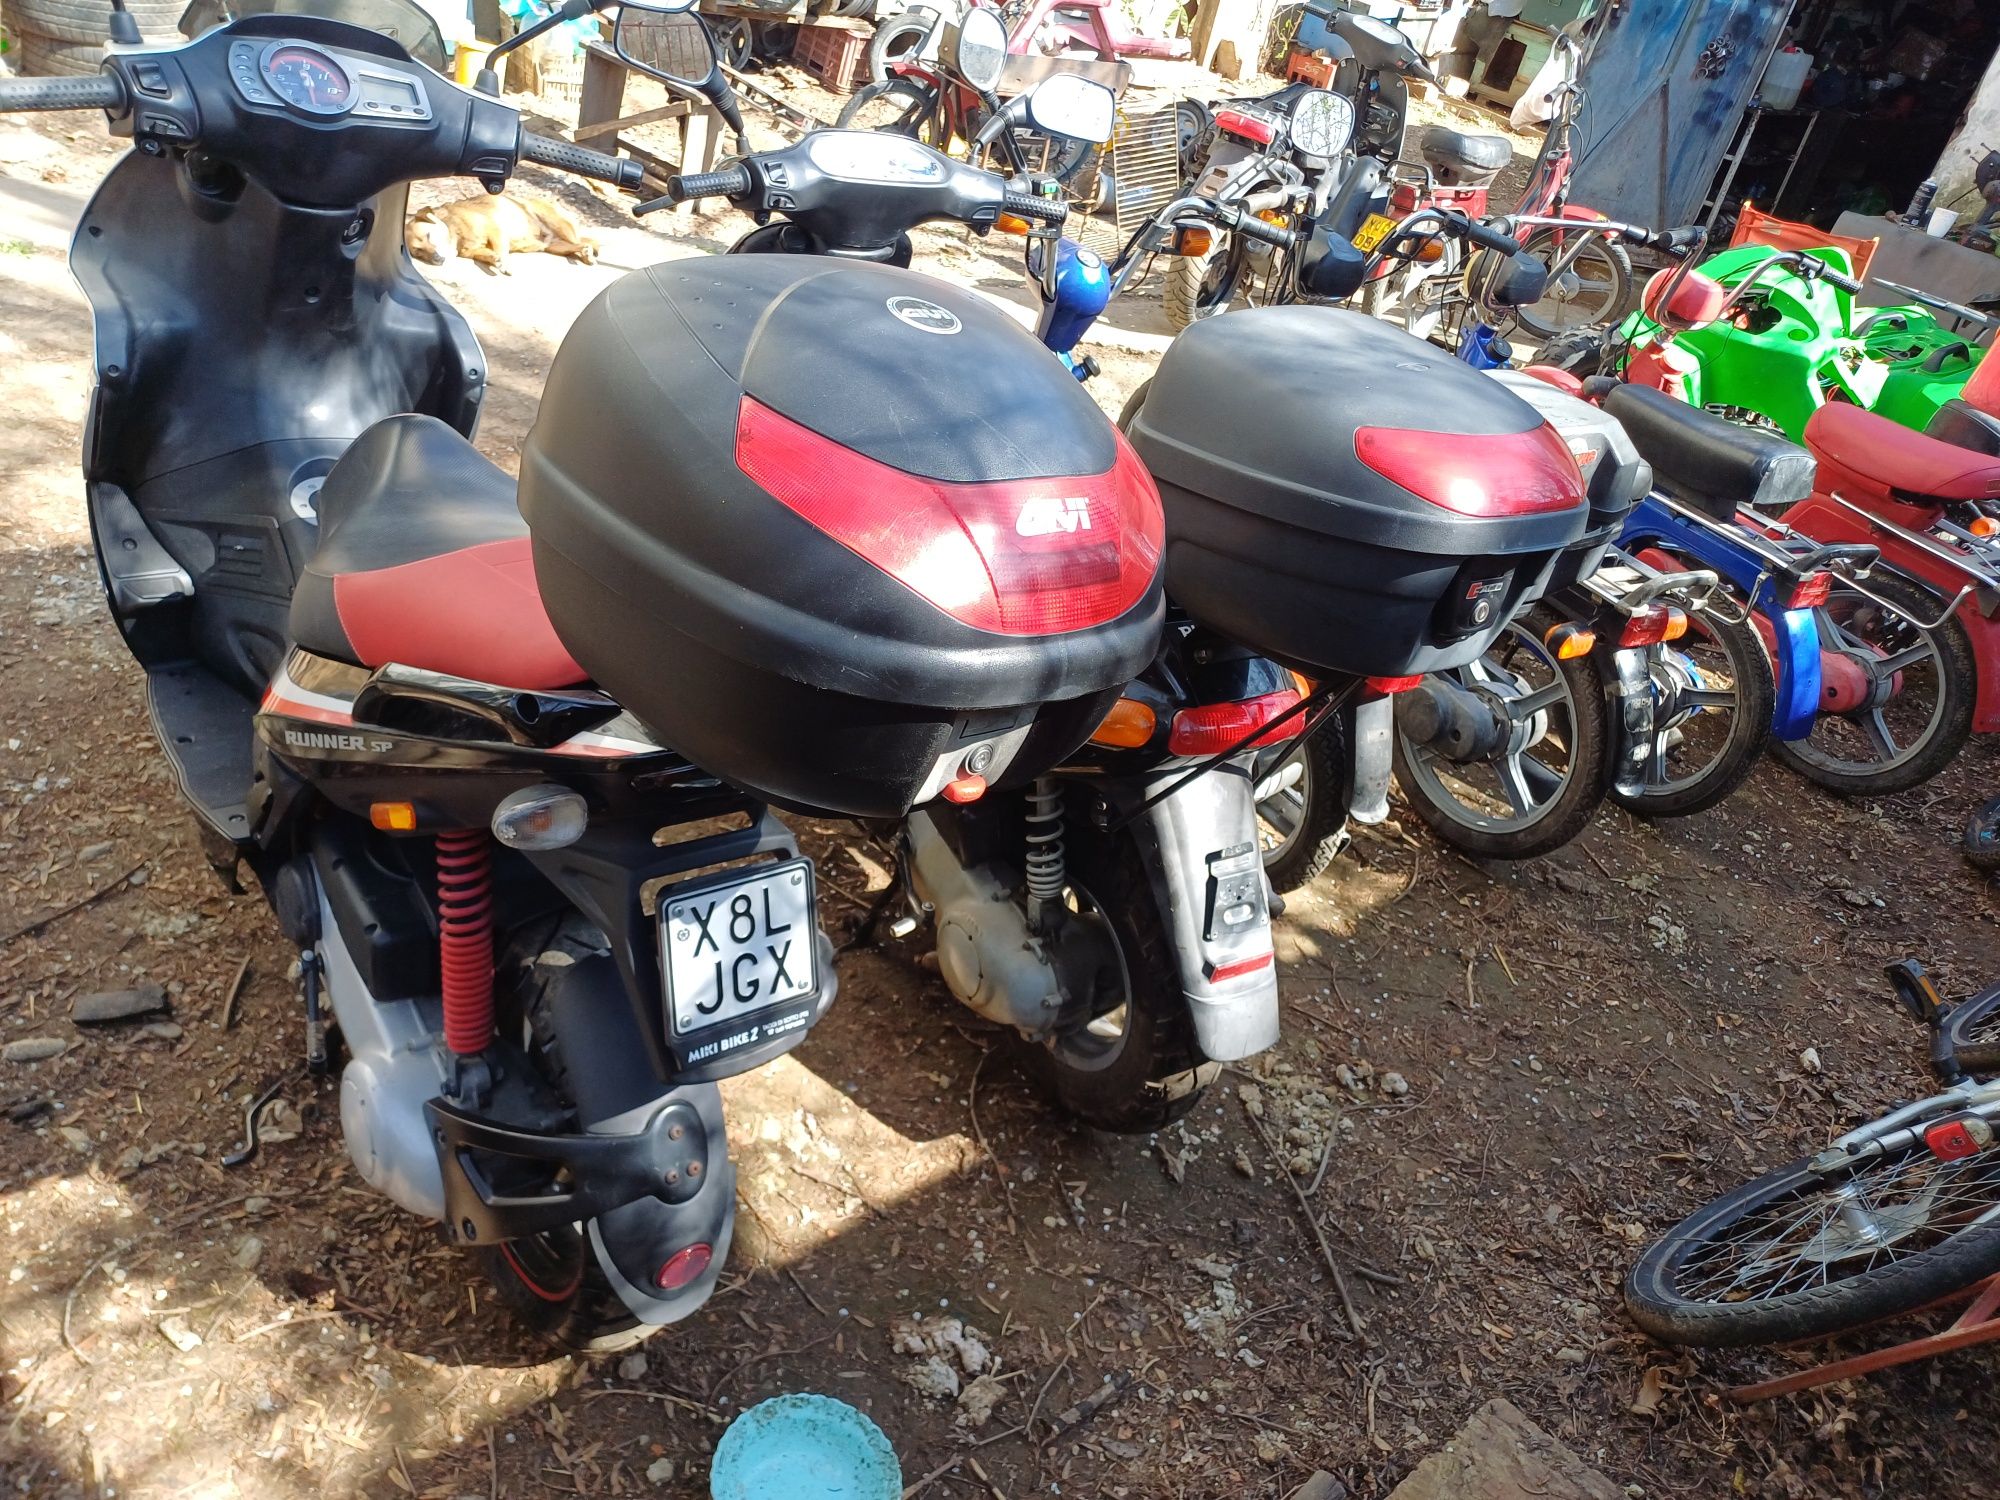 Vand scutere / mopede PIAGGIO  , 49 cc ,  recent aduse din